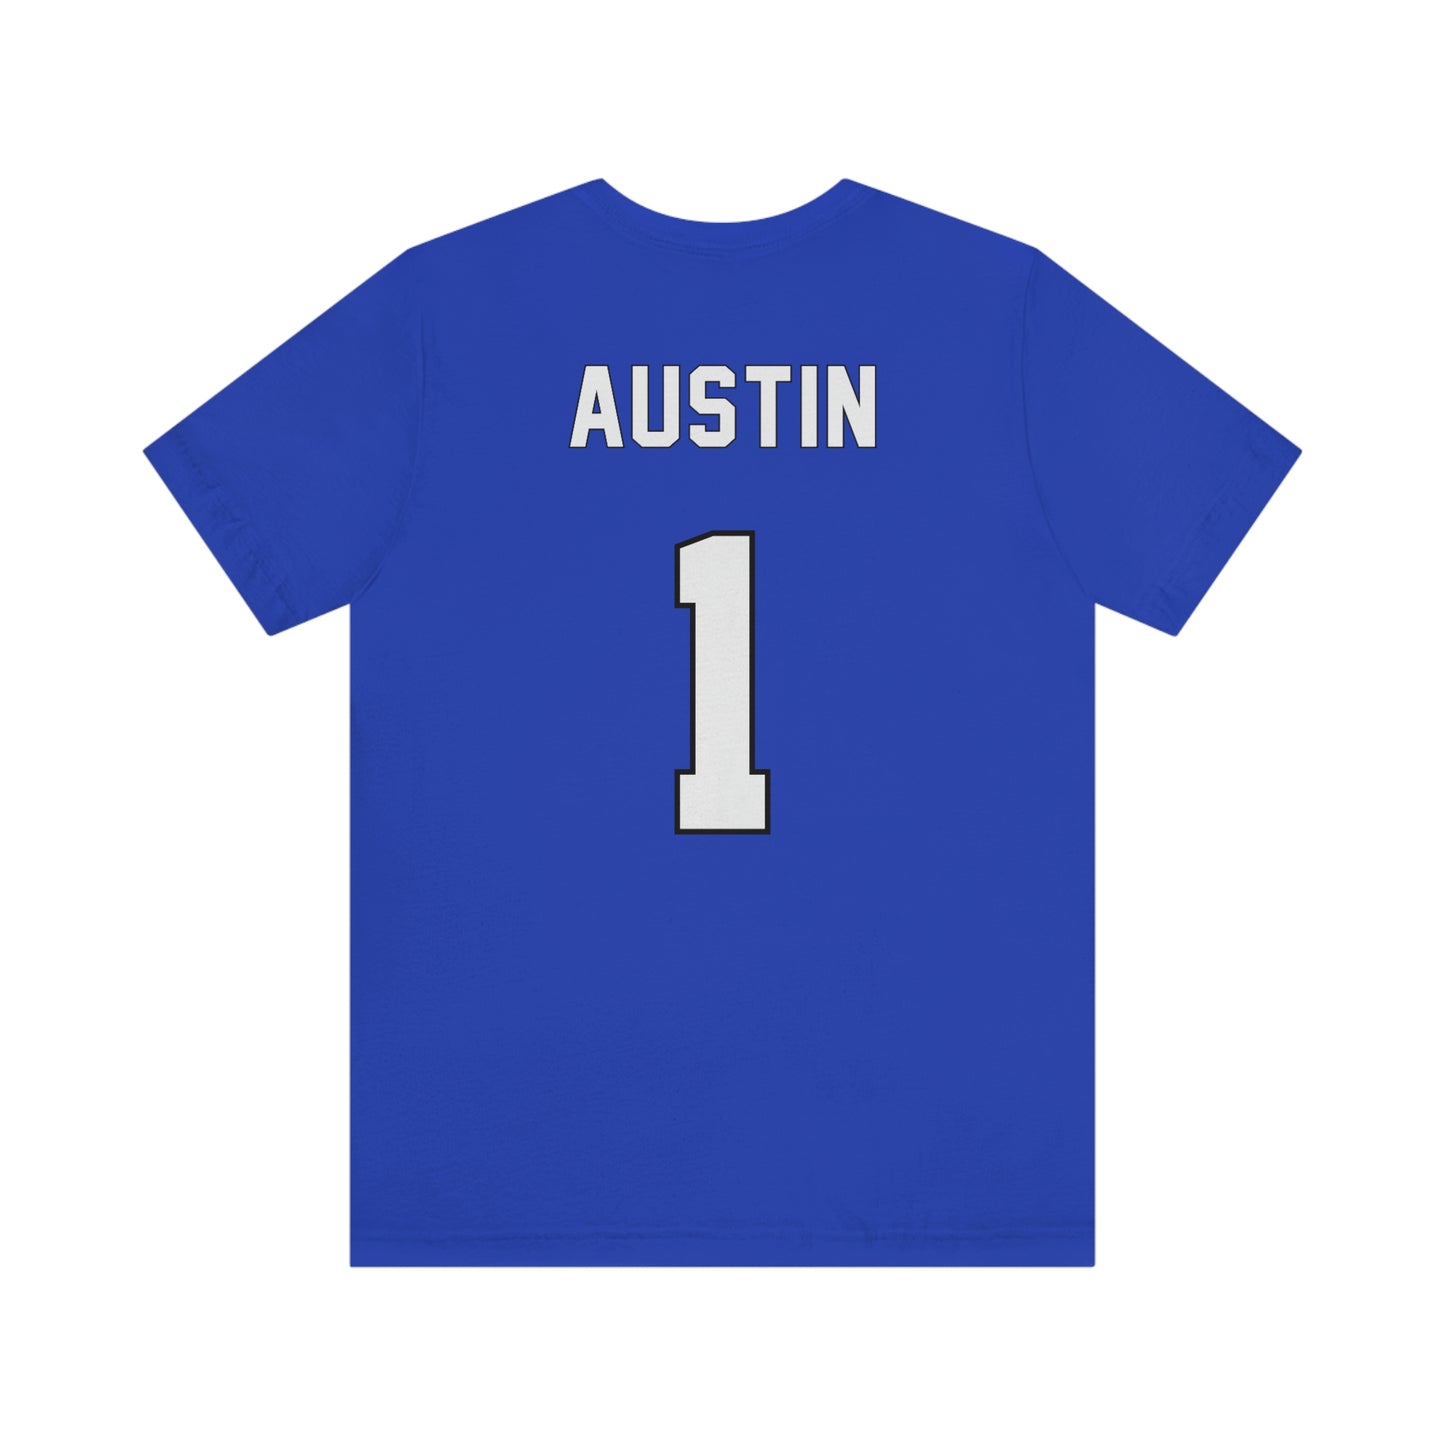 Jordan Austin Unisex Jersey Shirt